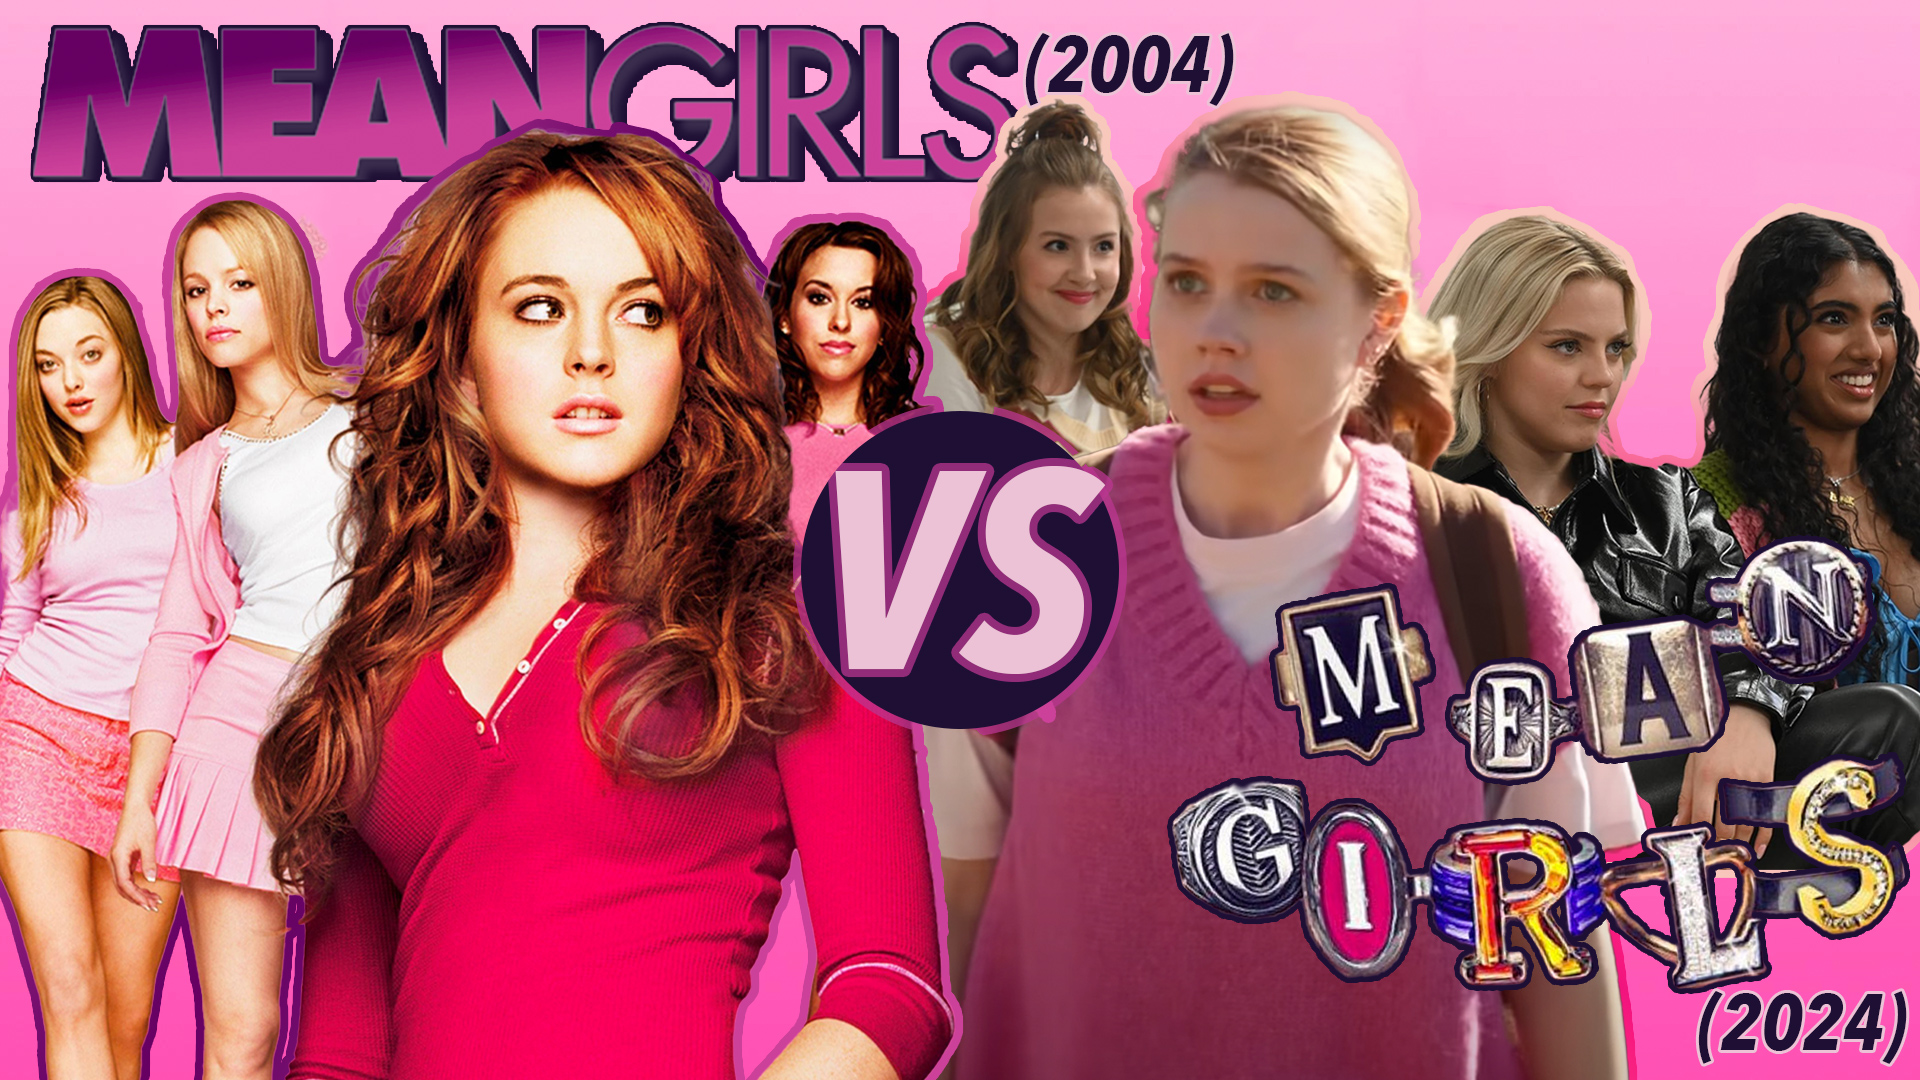 Mean Girls (2004) vs. Mean Girls (2024)